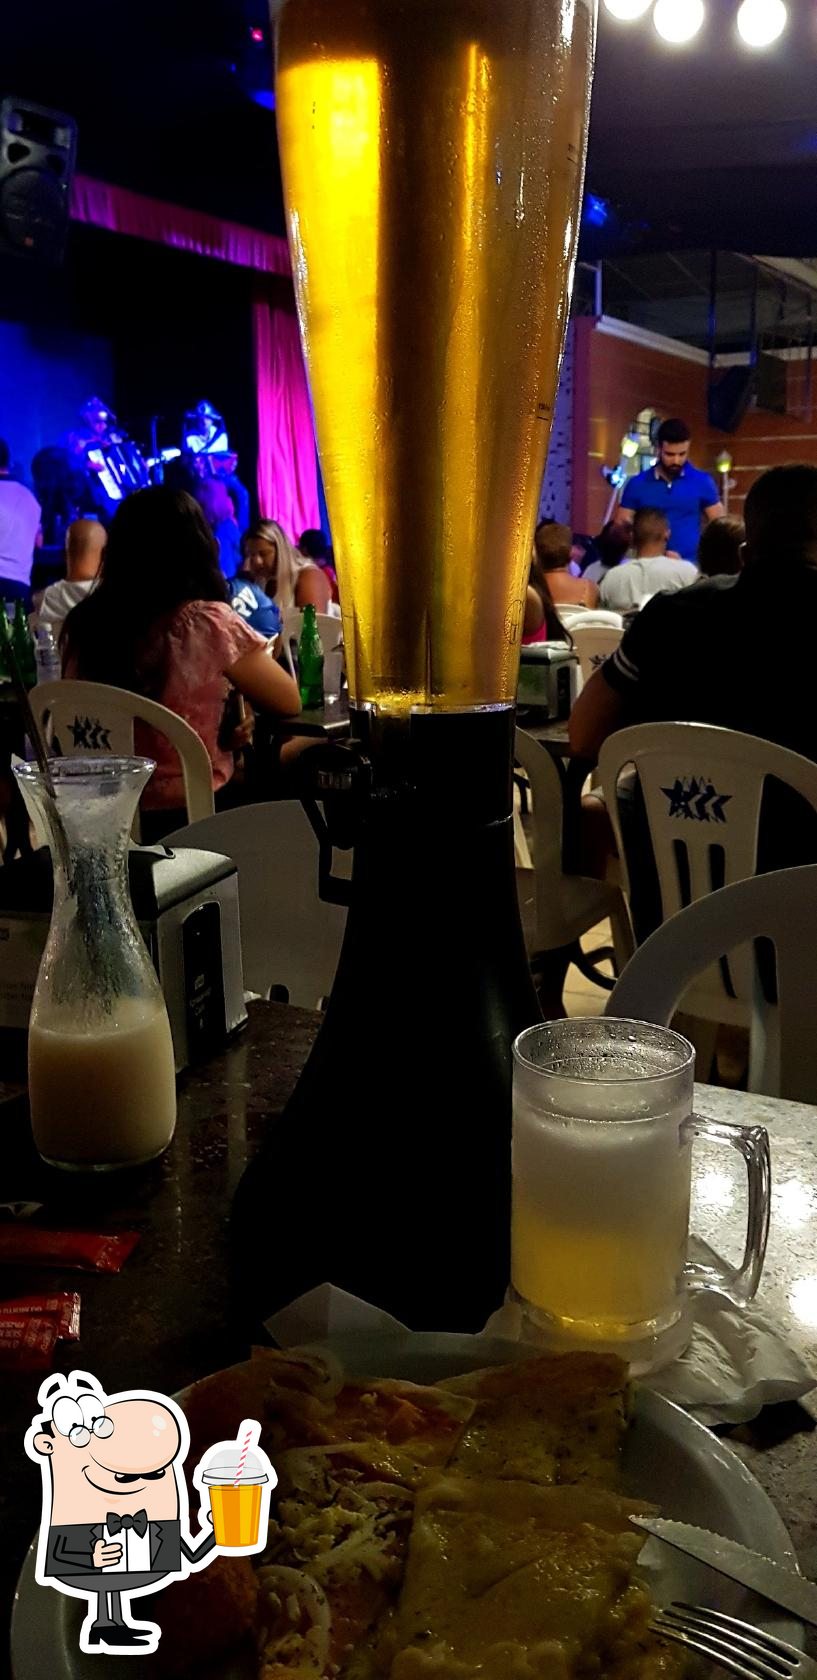 lupus beer - Picture of Lupus Bier, Fortaleza - Tripadvisor